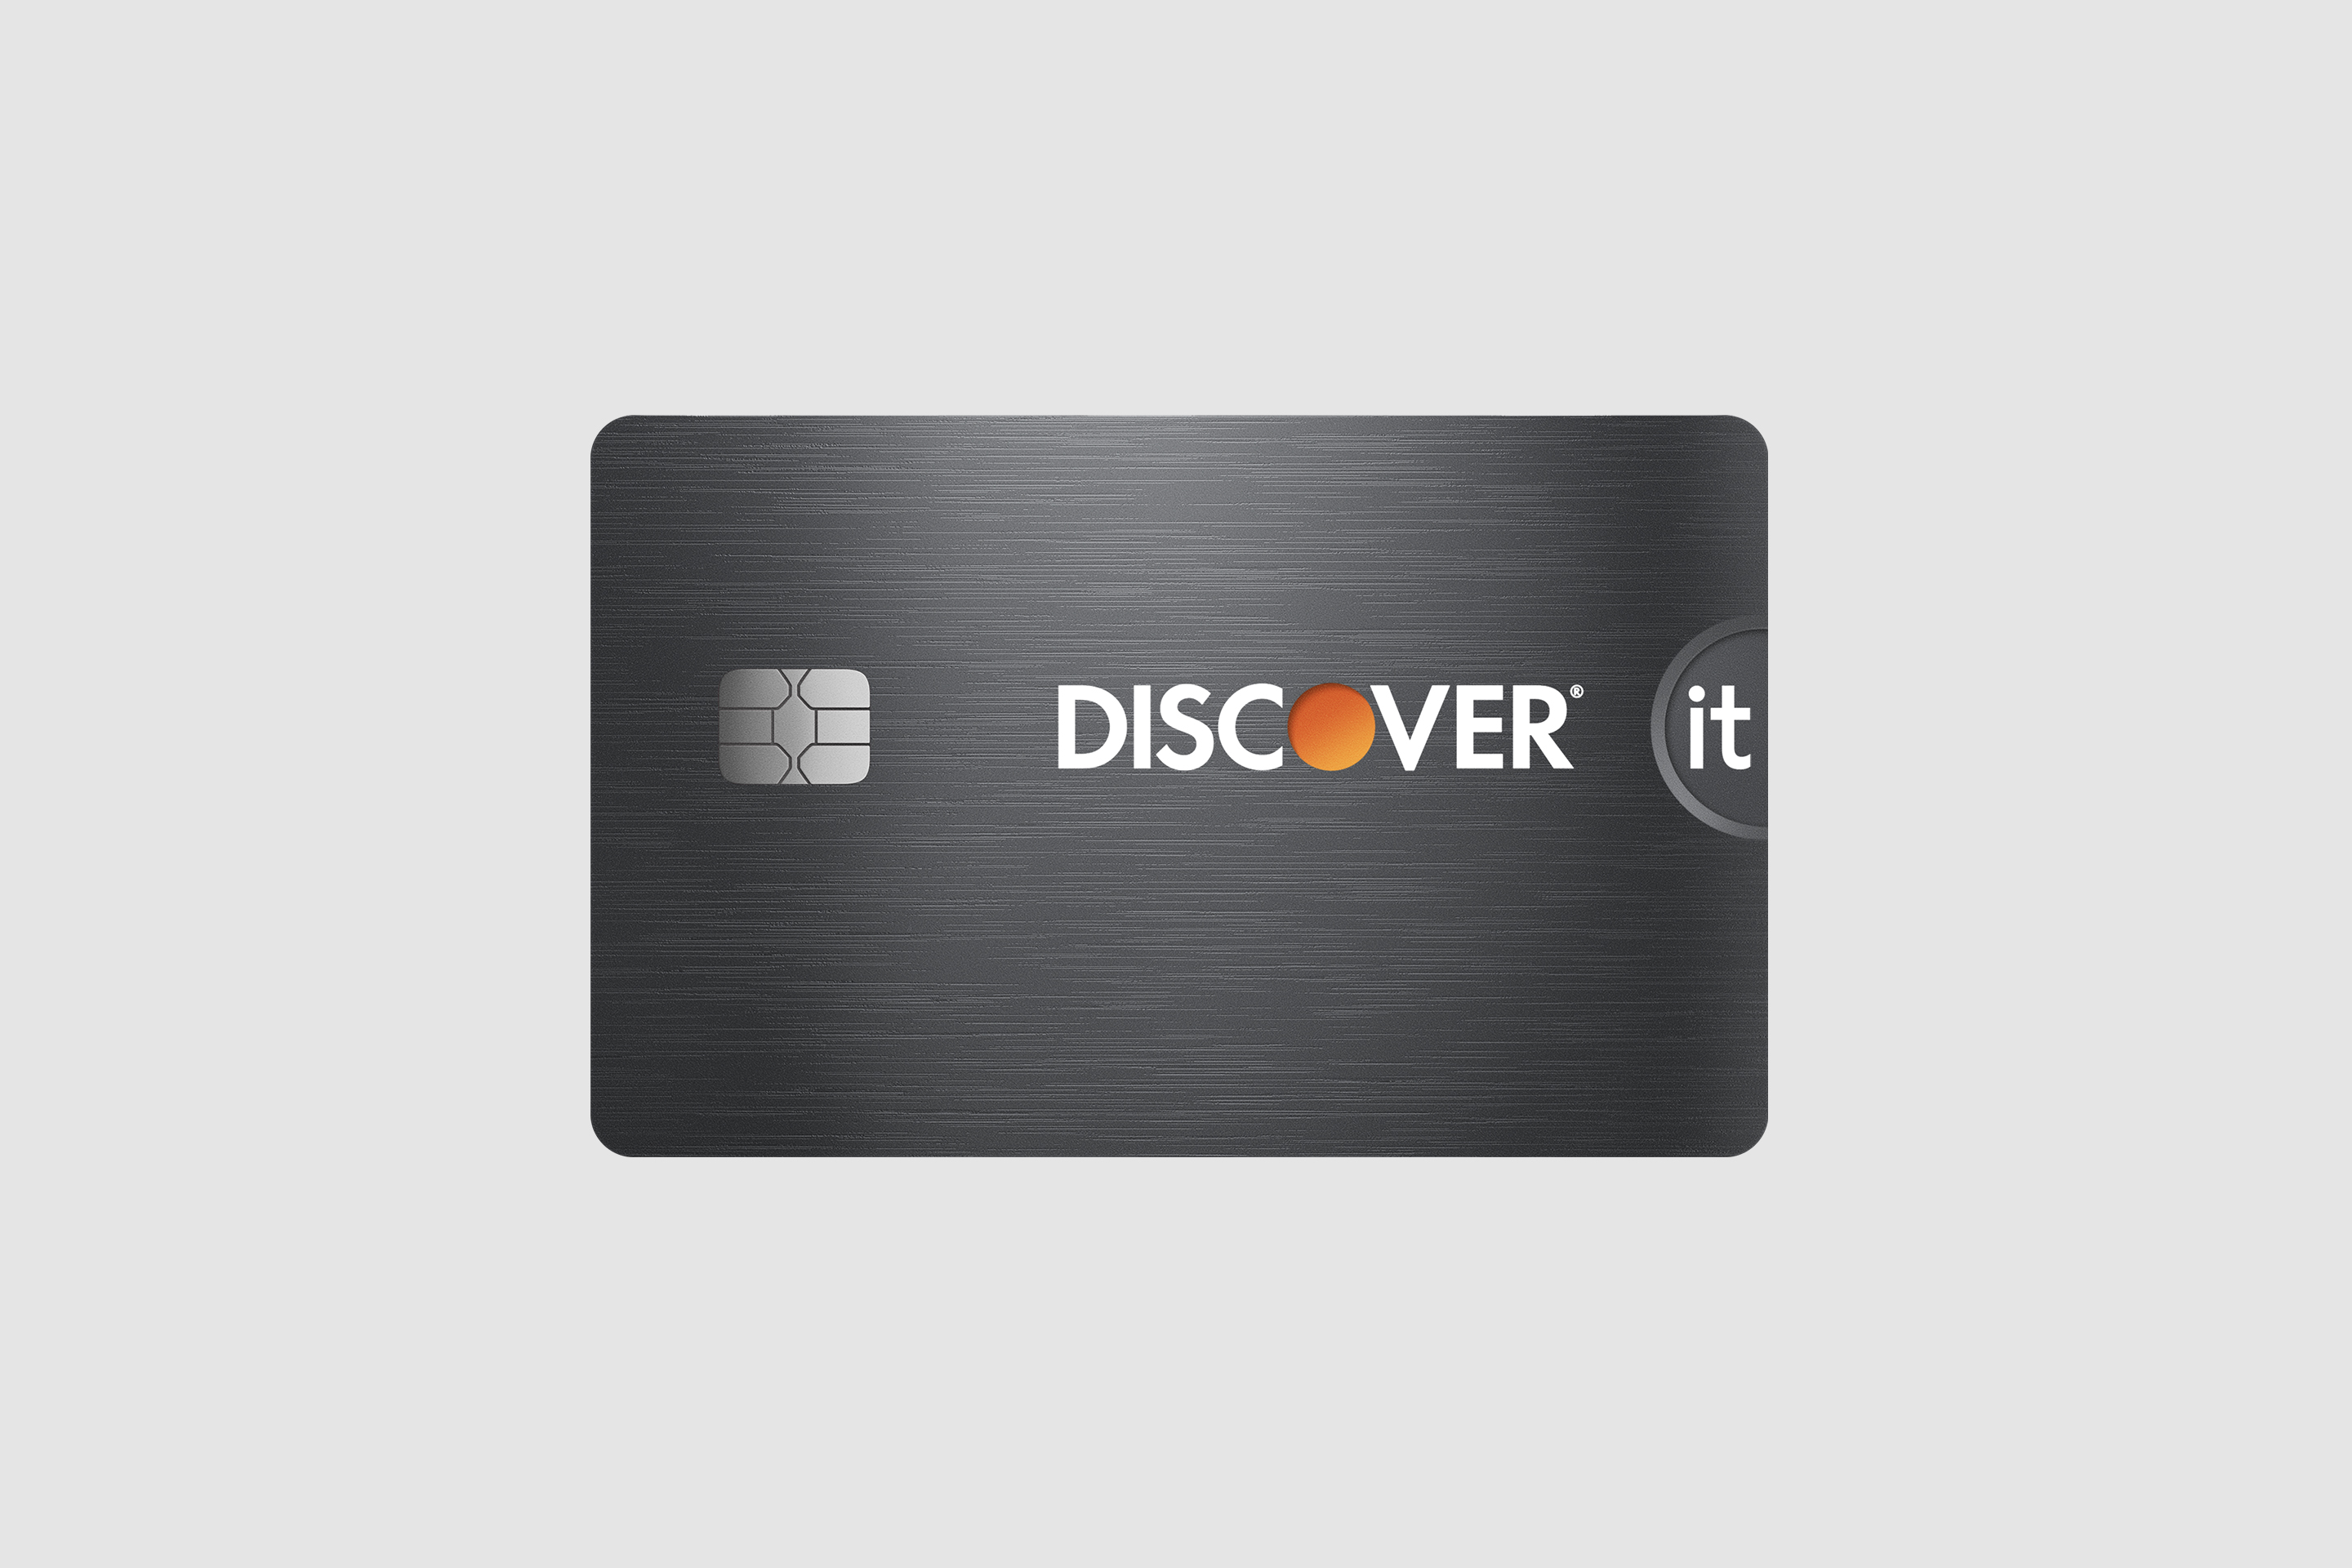 Discover itÂ®ï¸ Secured Credit Card